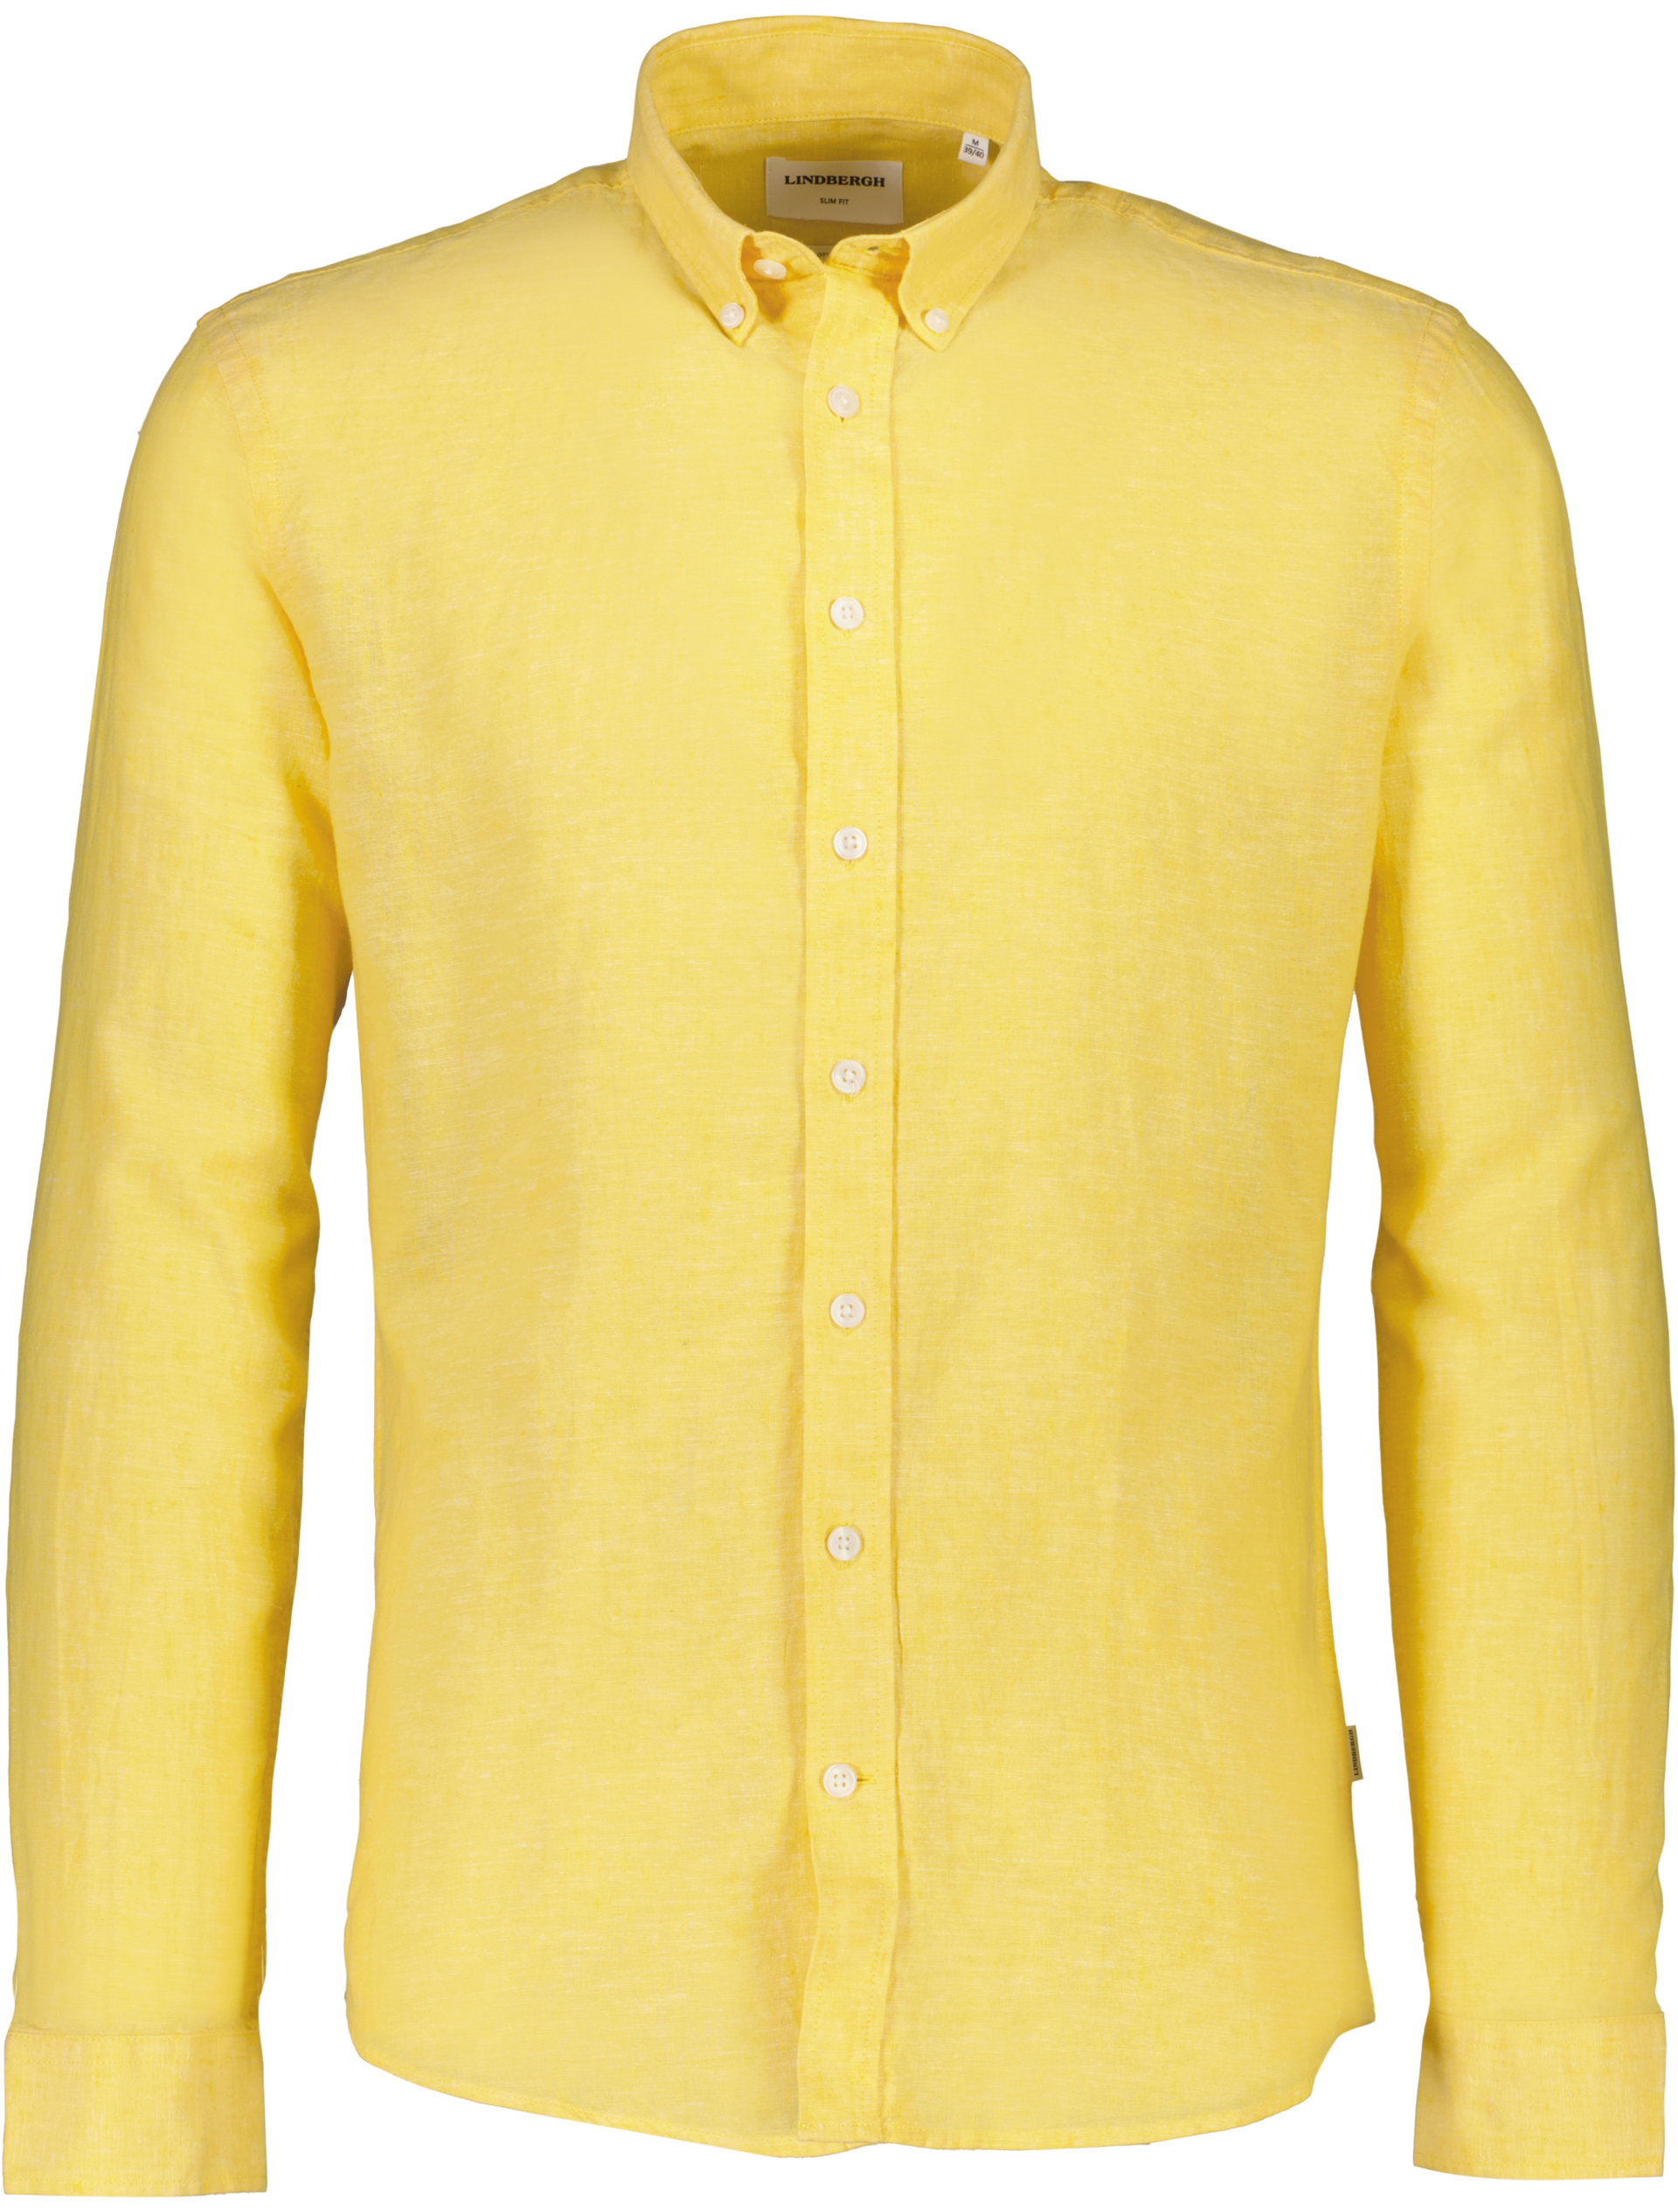 Lindbergh Linnen overhemd geel / mid yellow